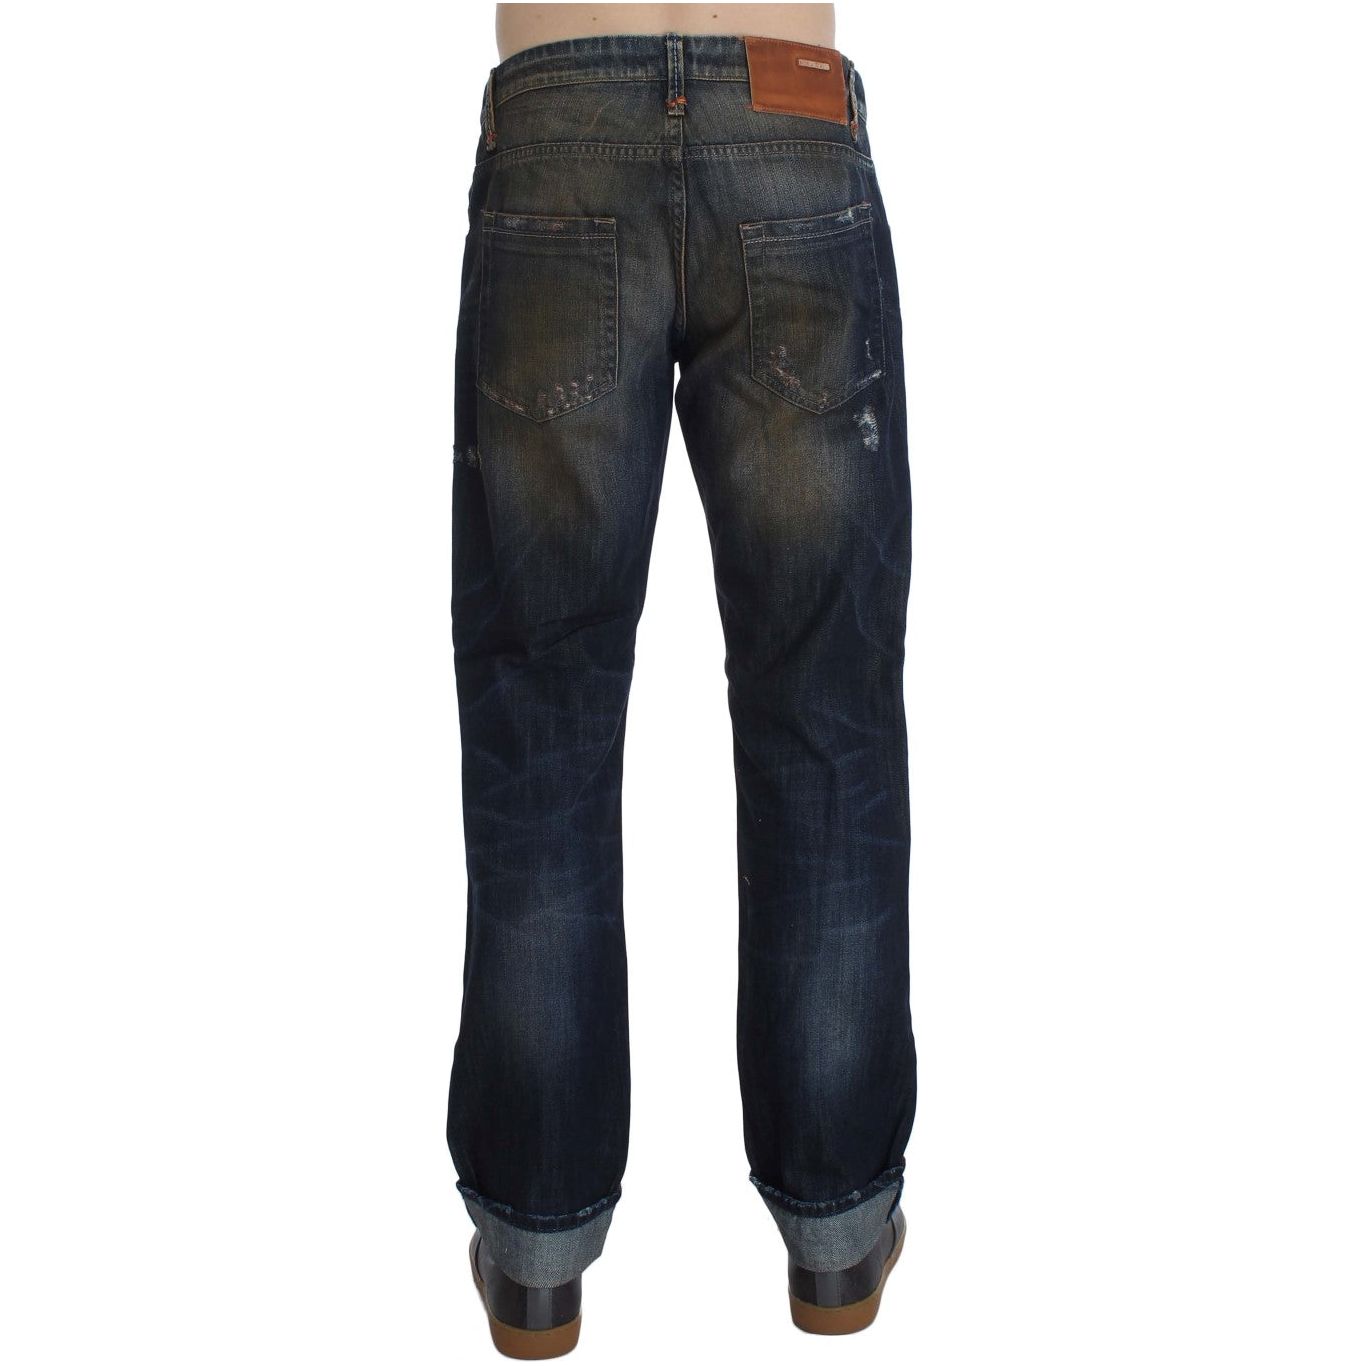 Acht Elegant Straight Fit Men's Denim Jeans blue-wash-cotton-regular-straight-fit-jeans-1 298995-blue-wash-cotton-regular-straight-fit-jeans-2-2.jpg